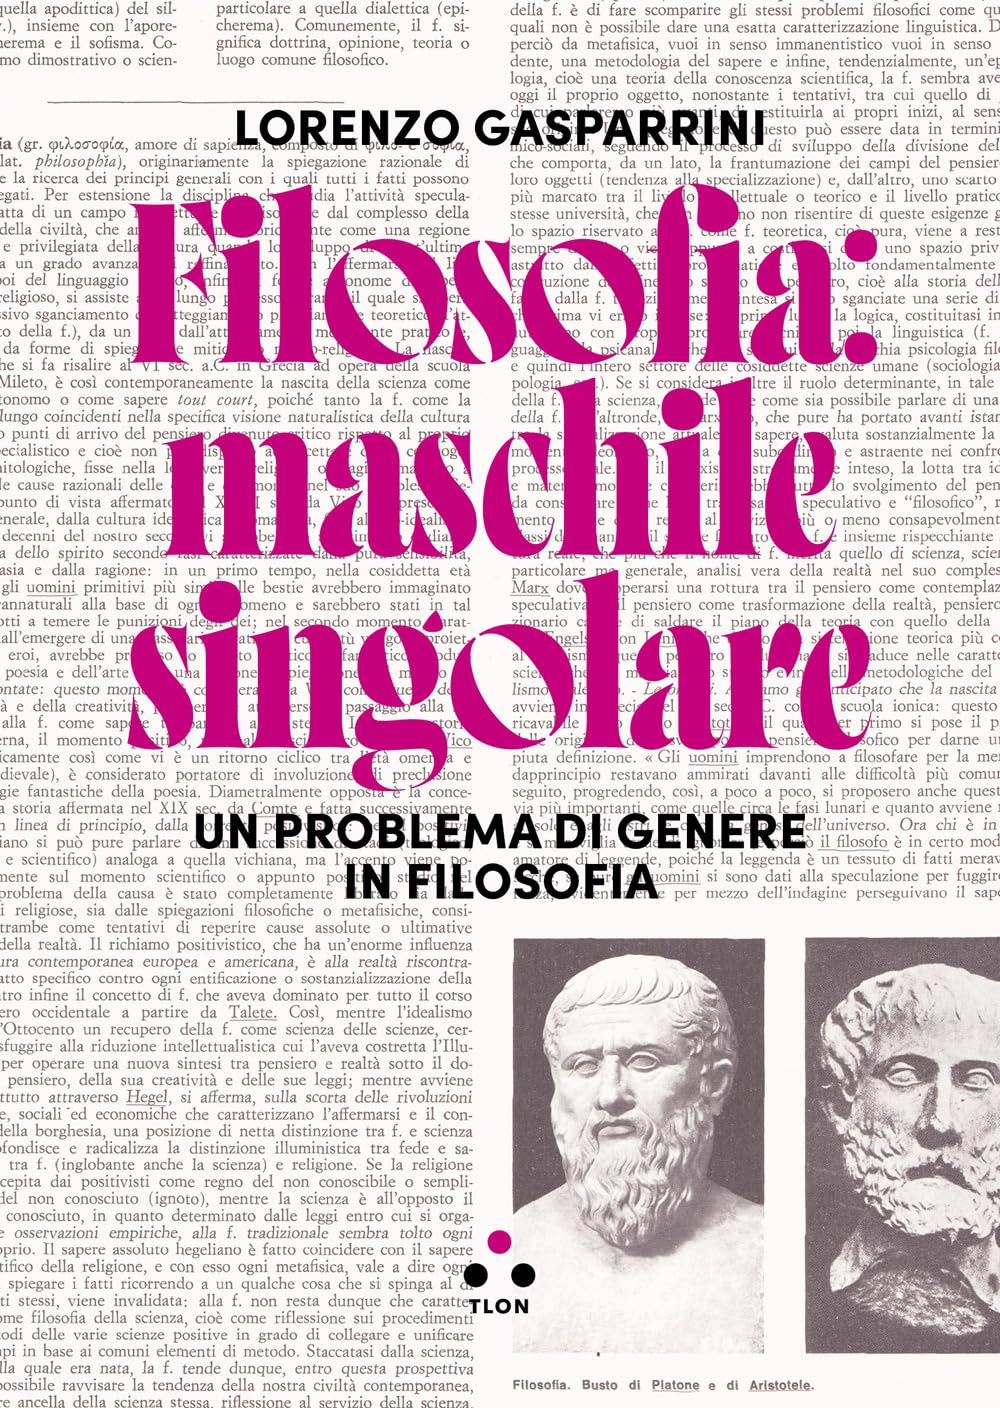 Lorenzo Gasparrini – Filosofia: maschile singolare